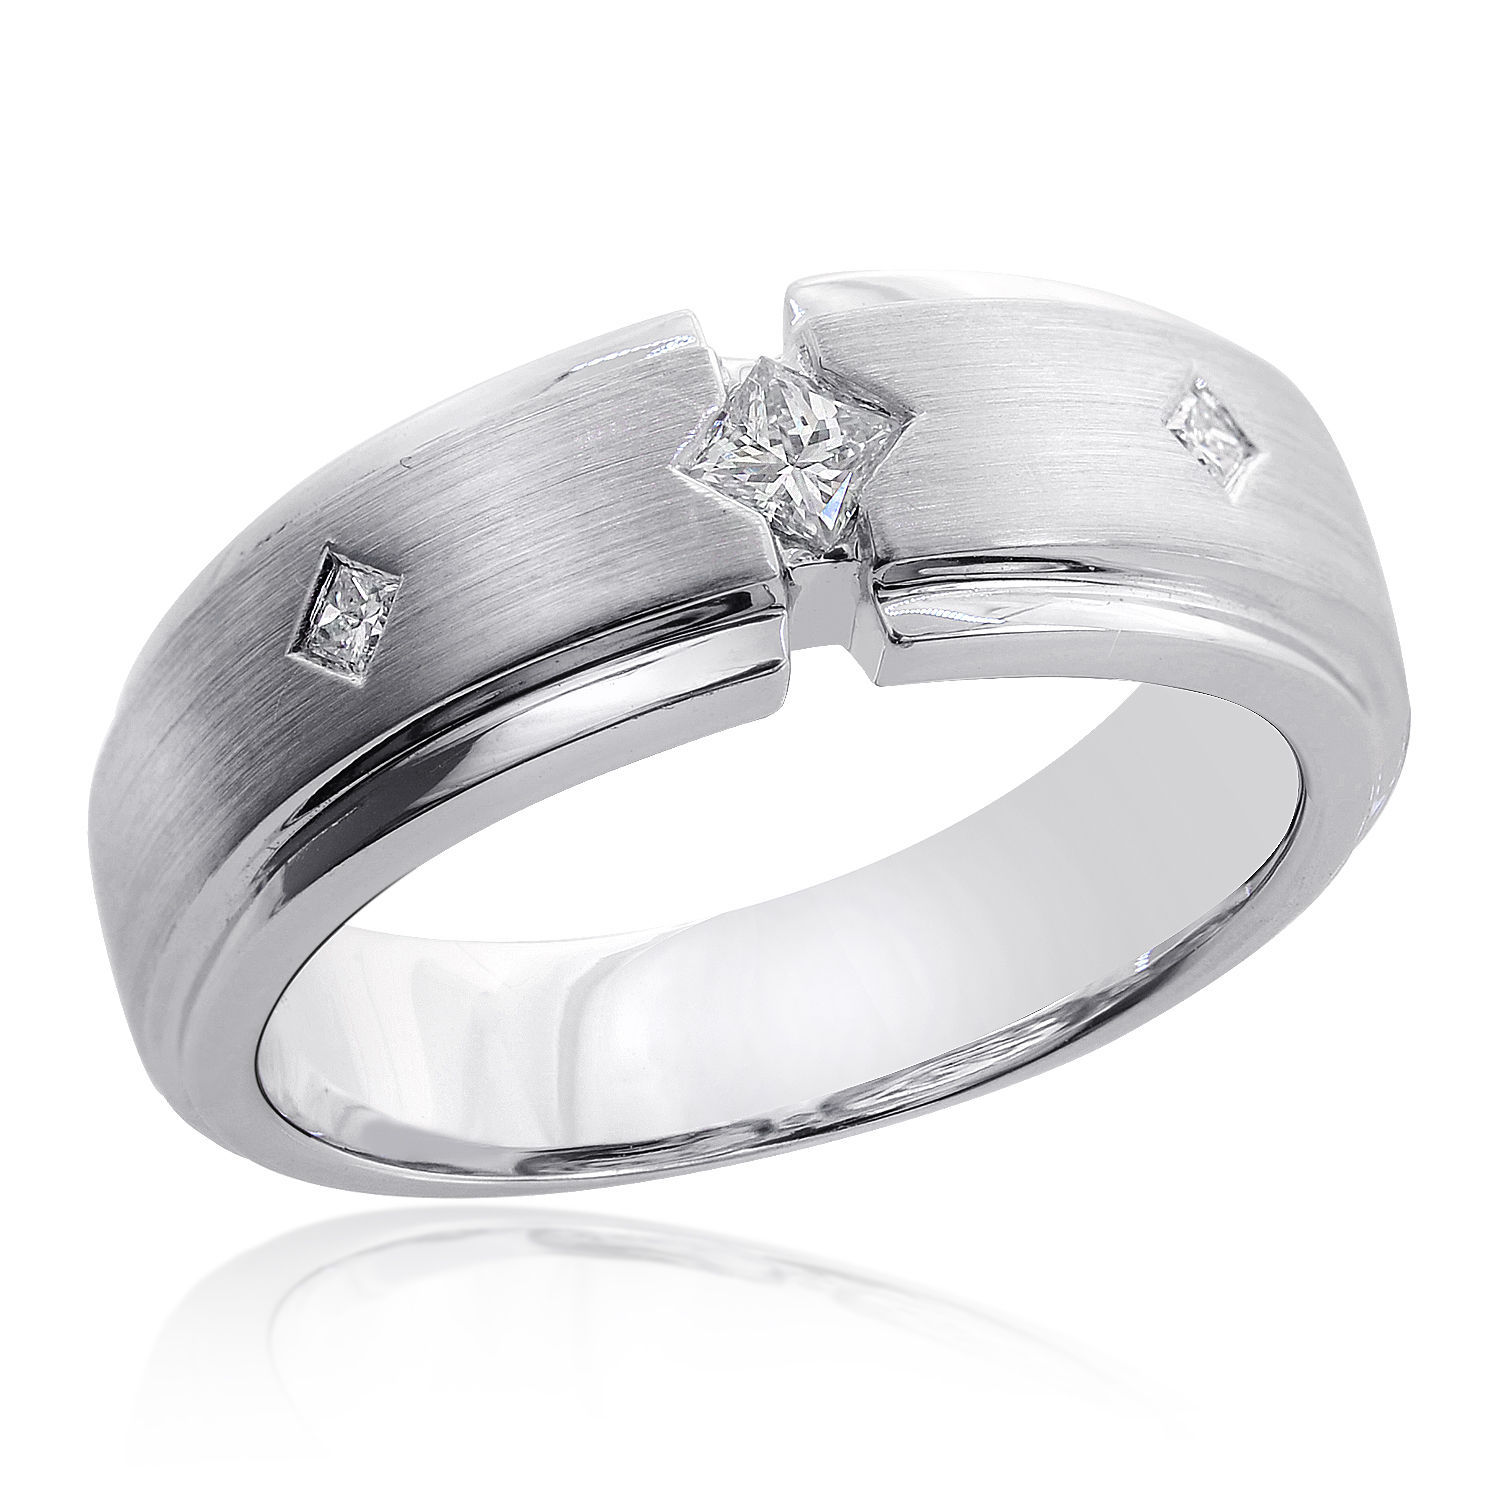 Primary image for 0.25 Carat Mens Princess Cut Diamond Wedding Band 14K White Gold